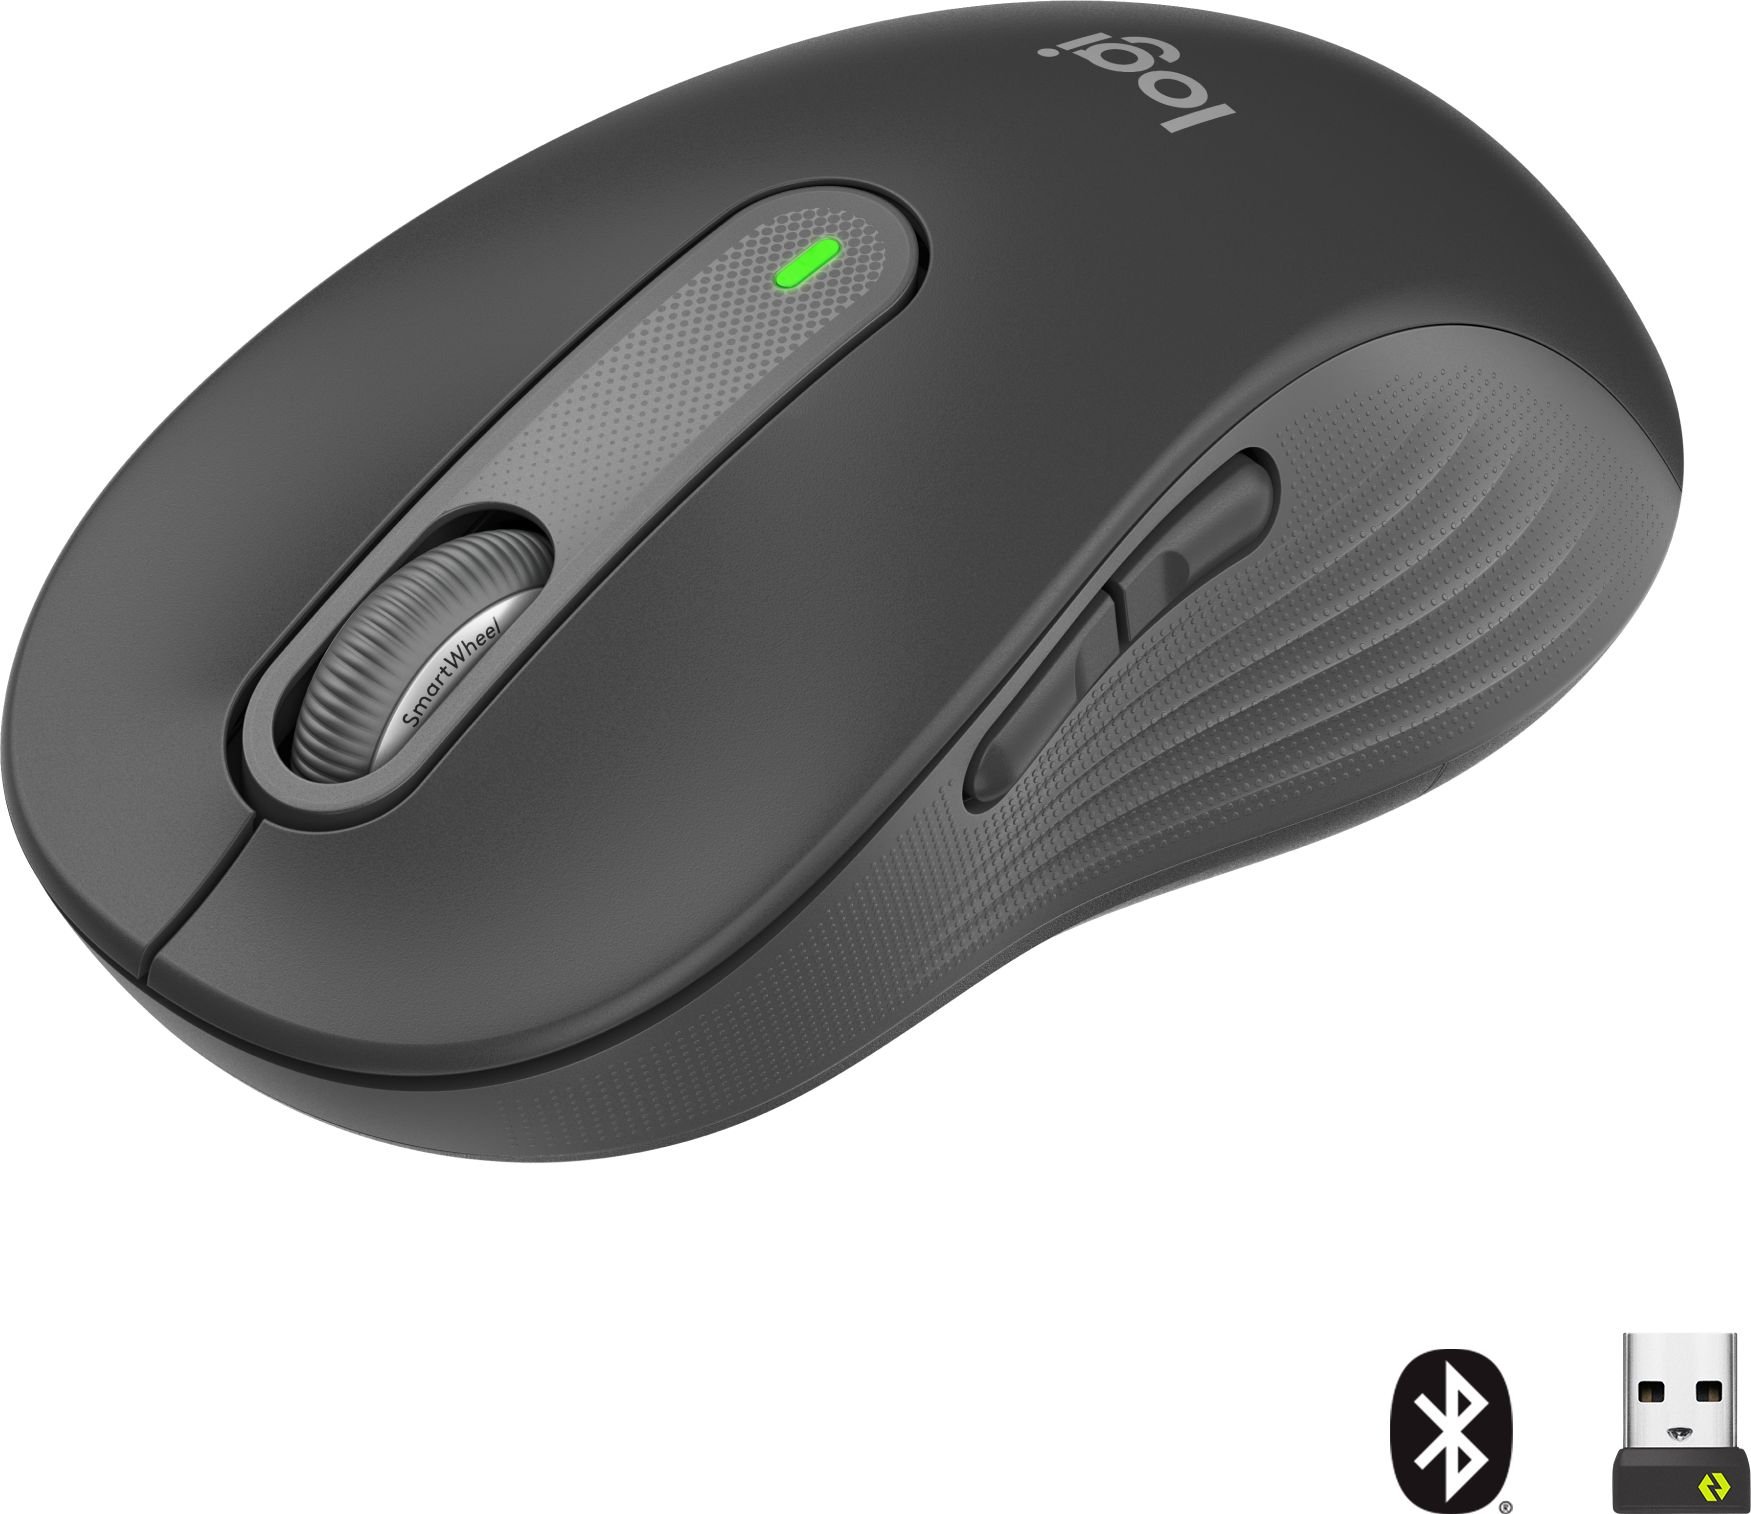 Mouse Logitech M650 L Silent, Bluetooth, Wireless, Bolt USB receiver, Graphite